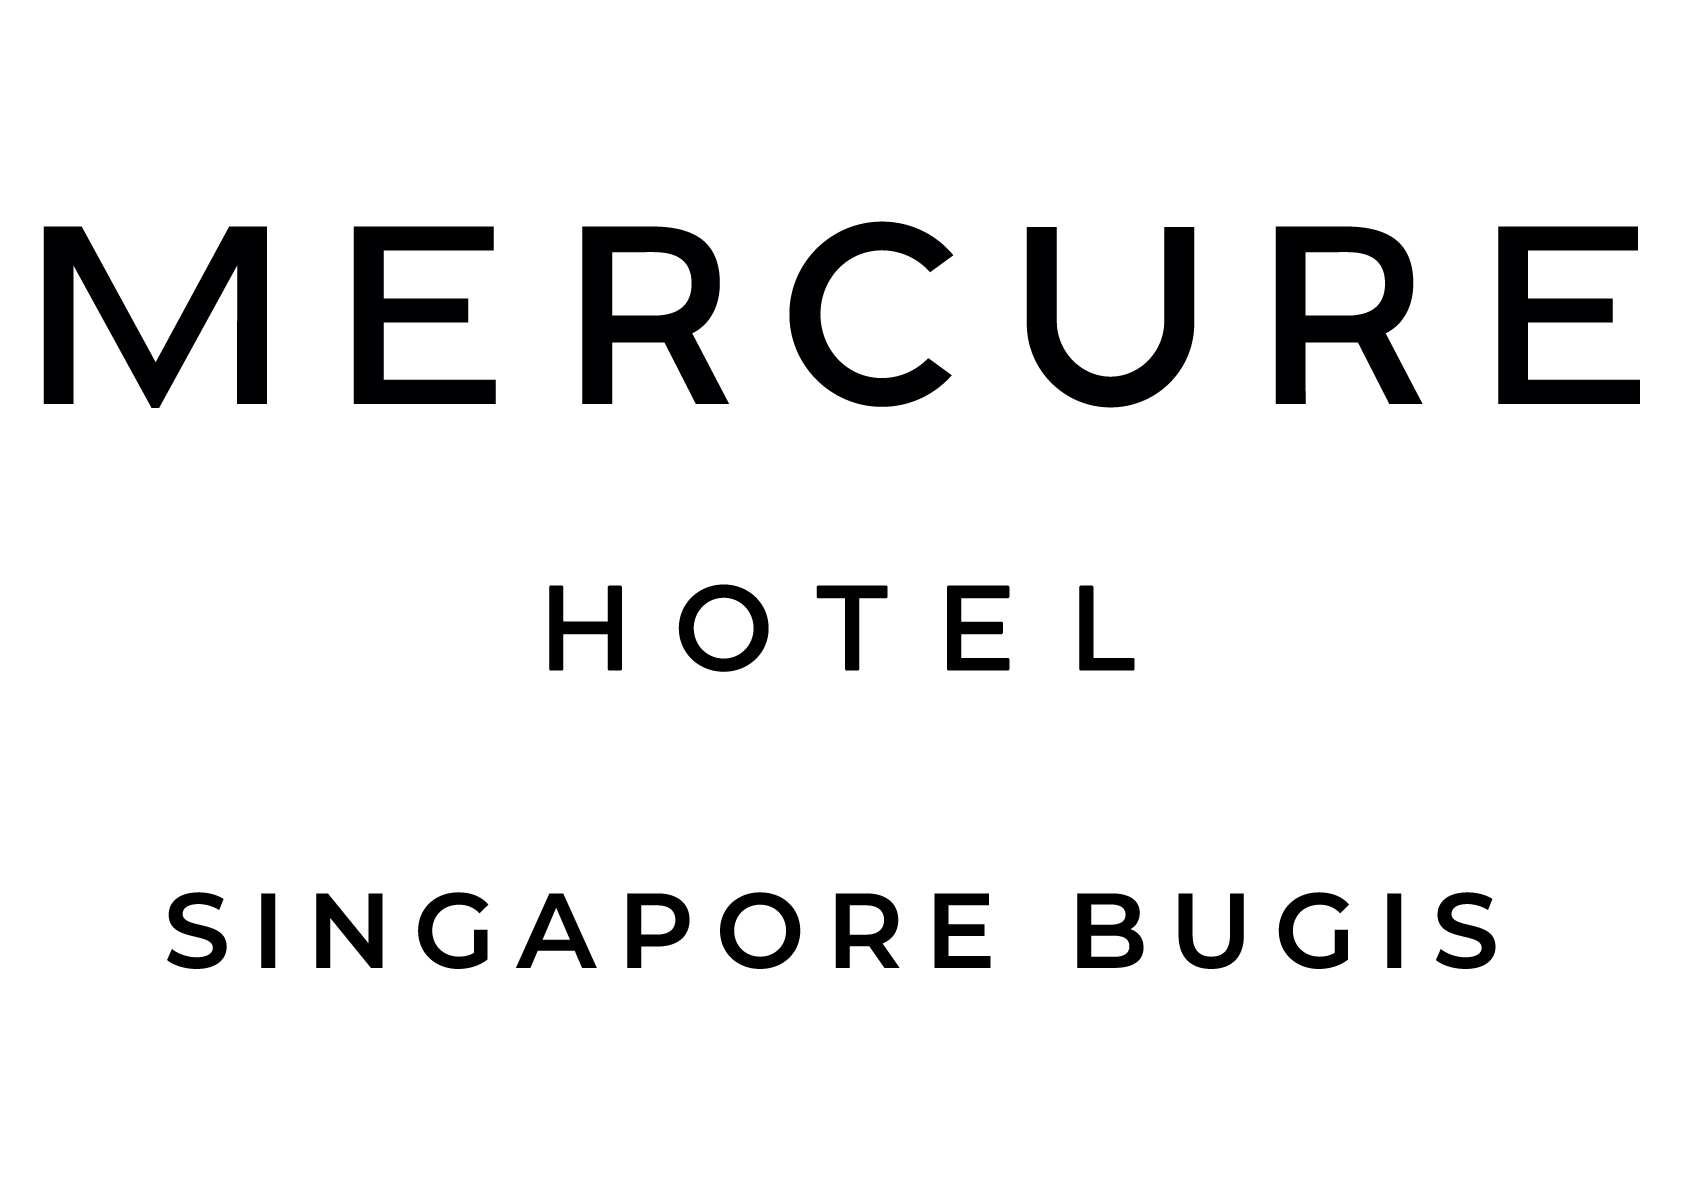 Mercure Singapore Bugis logo